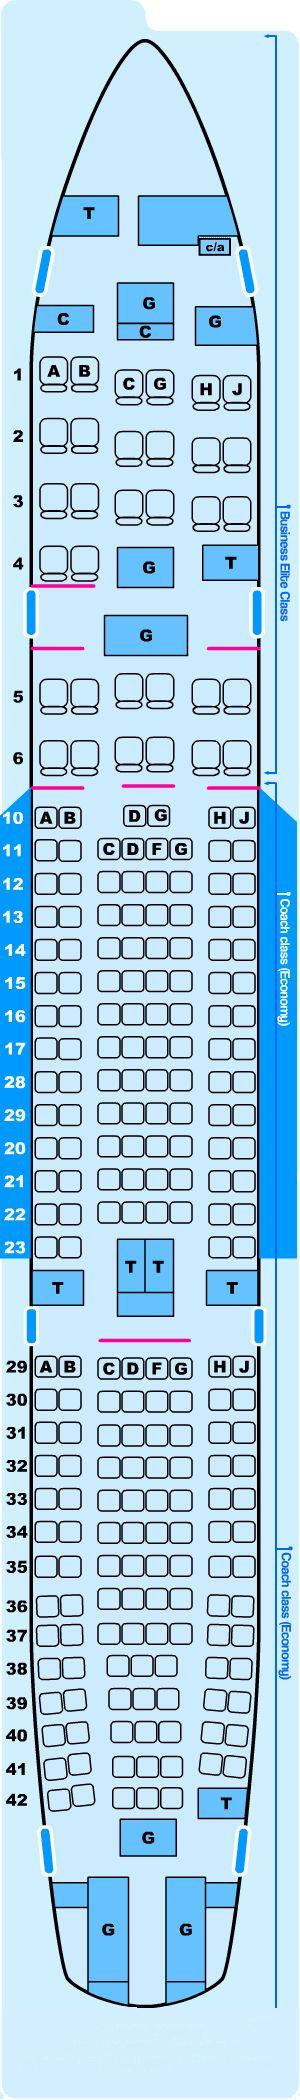 Plan de cabine Northwest Airlines Airbus A330 200 | SeatMaestro.fr